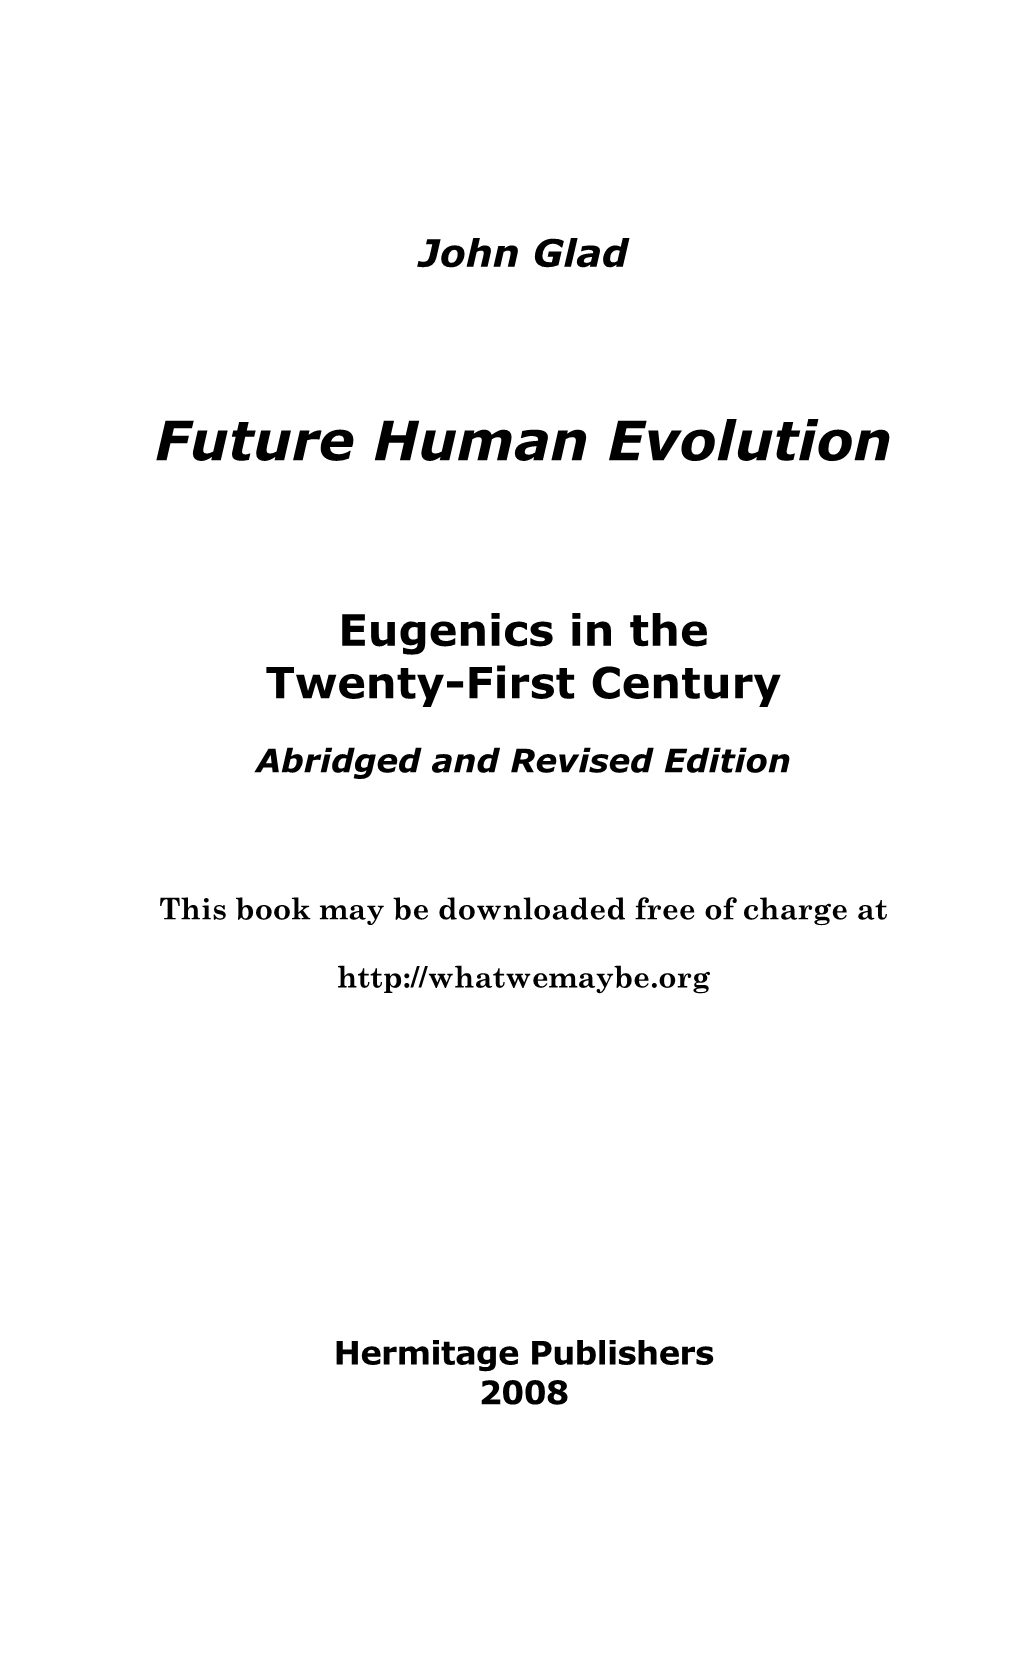 Future Human Evolution: Eugenics in the Twenty-First Century / John Glad